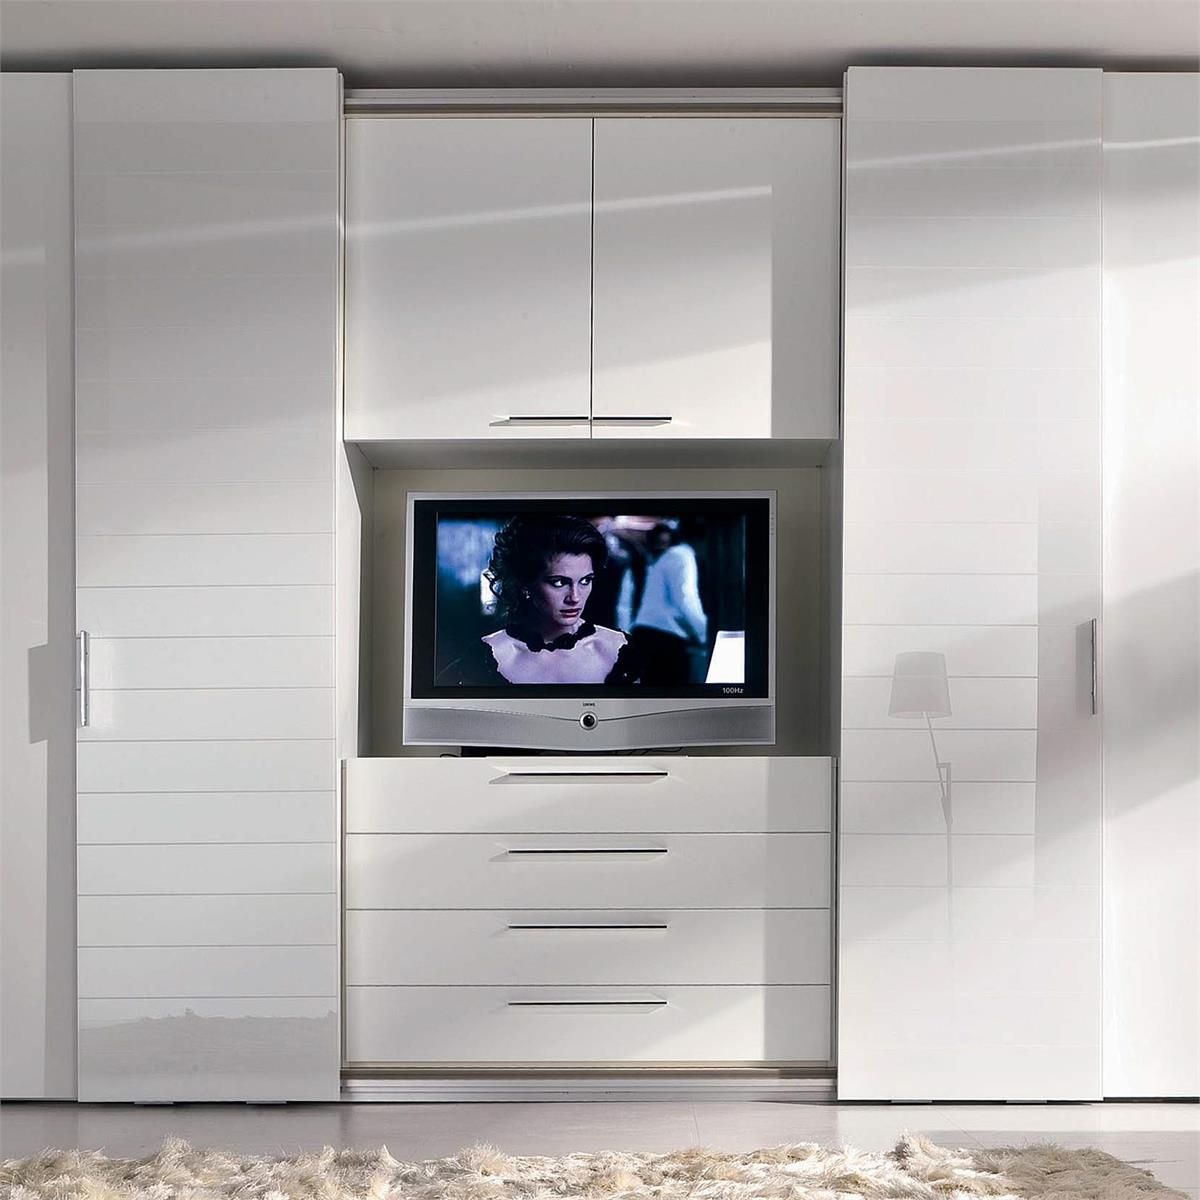 Телевизор встроен в шкаф. Шкаф купе с телевизором. Шкаф с телевизором в спальню. Телевизор встроенный в шкаф. Шкаф купе со встроенным телевизором.